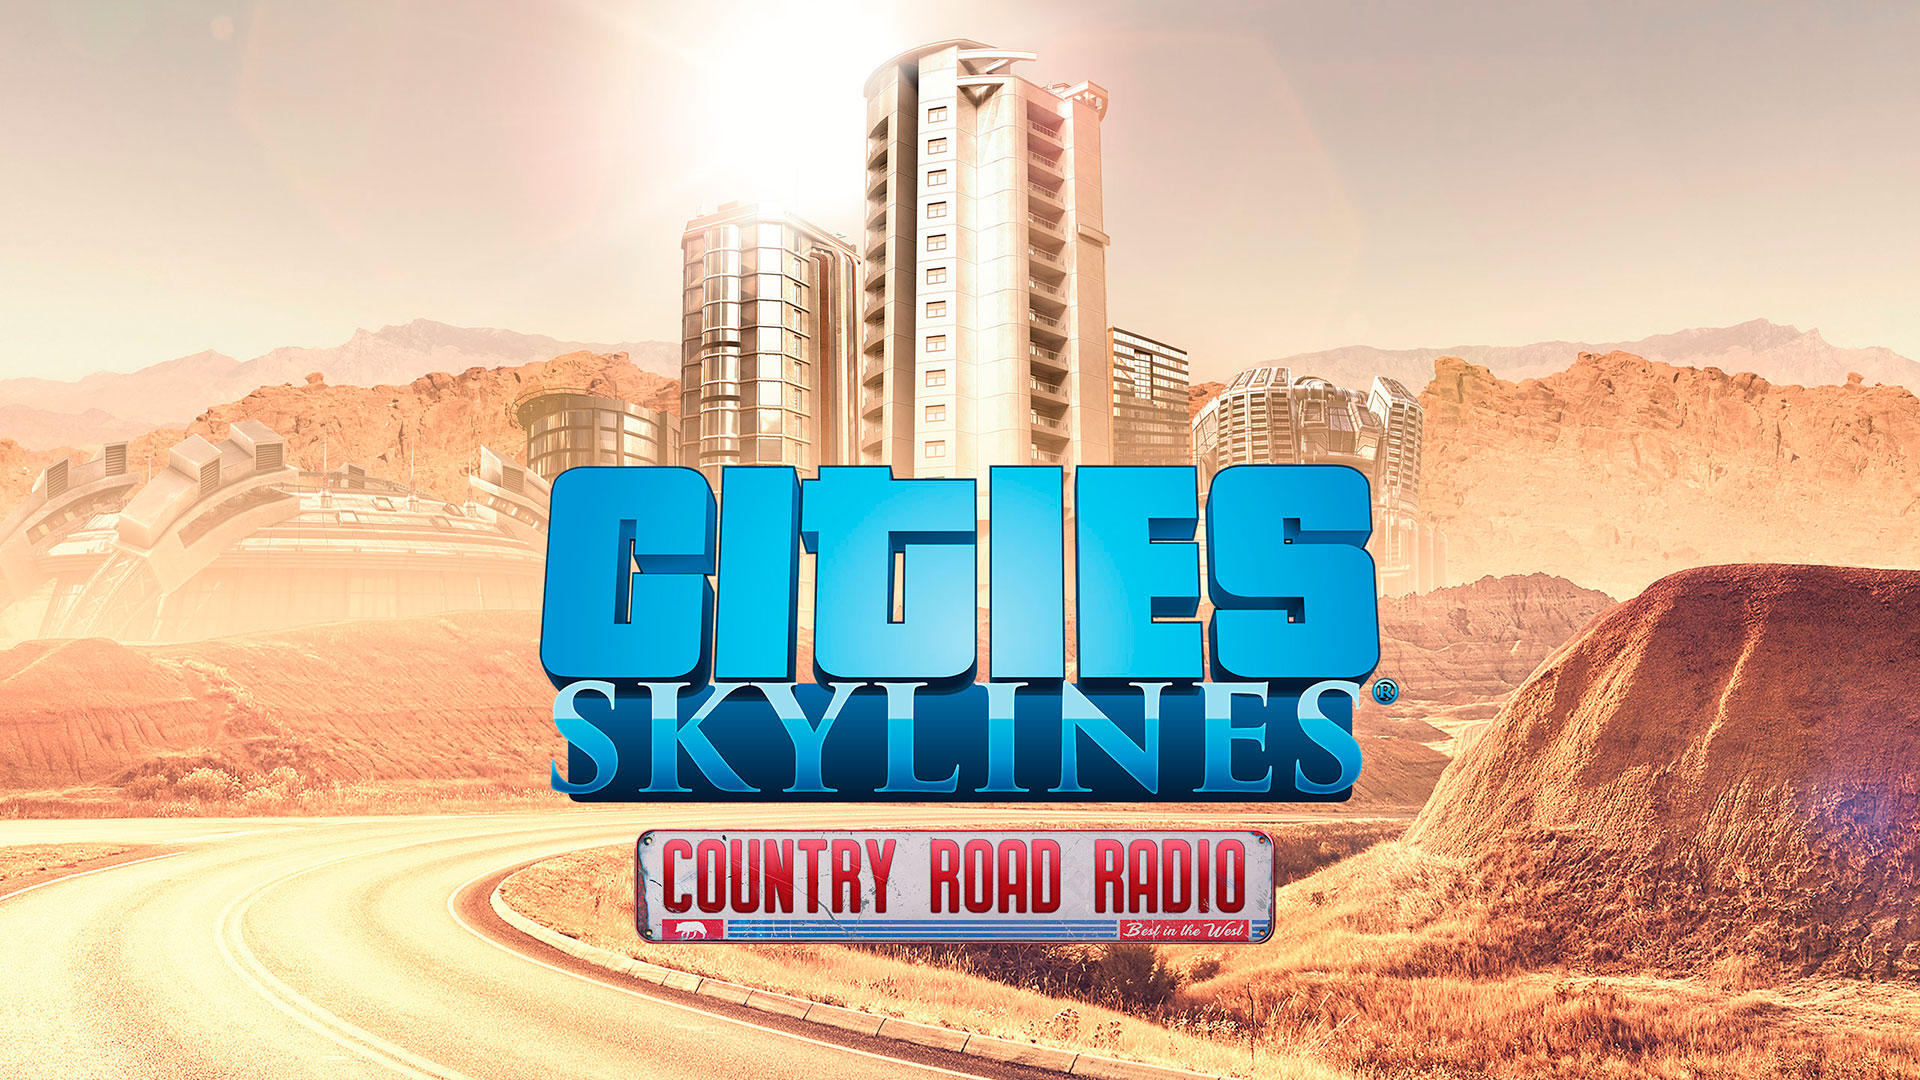 Country Road Radio cities skyline